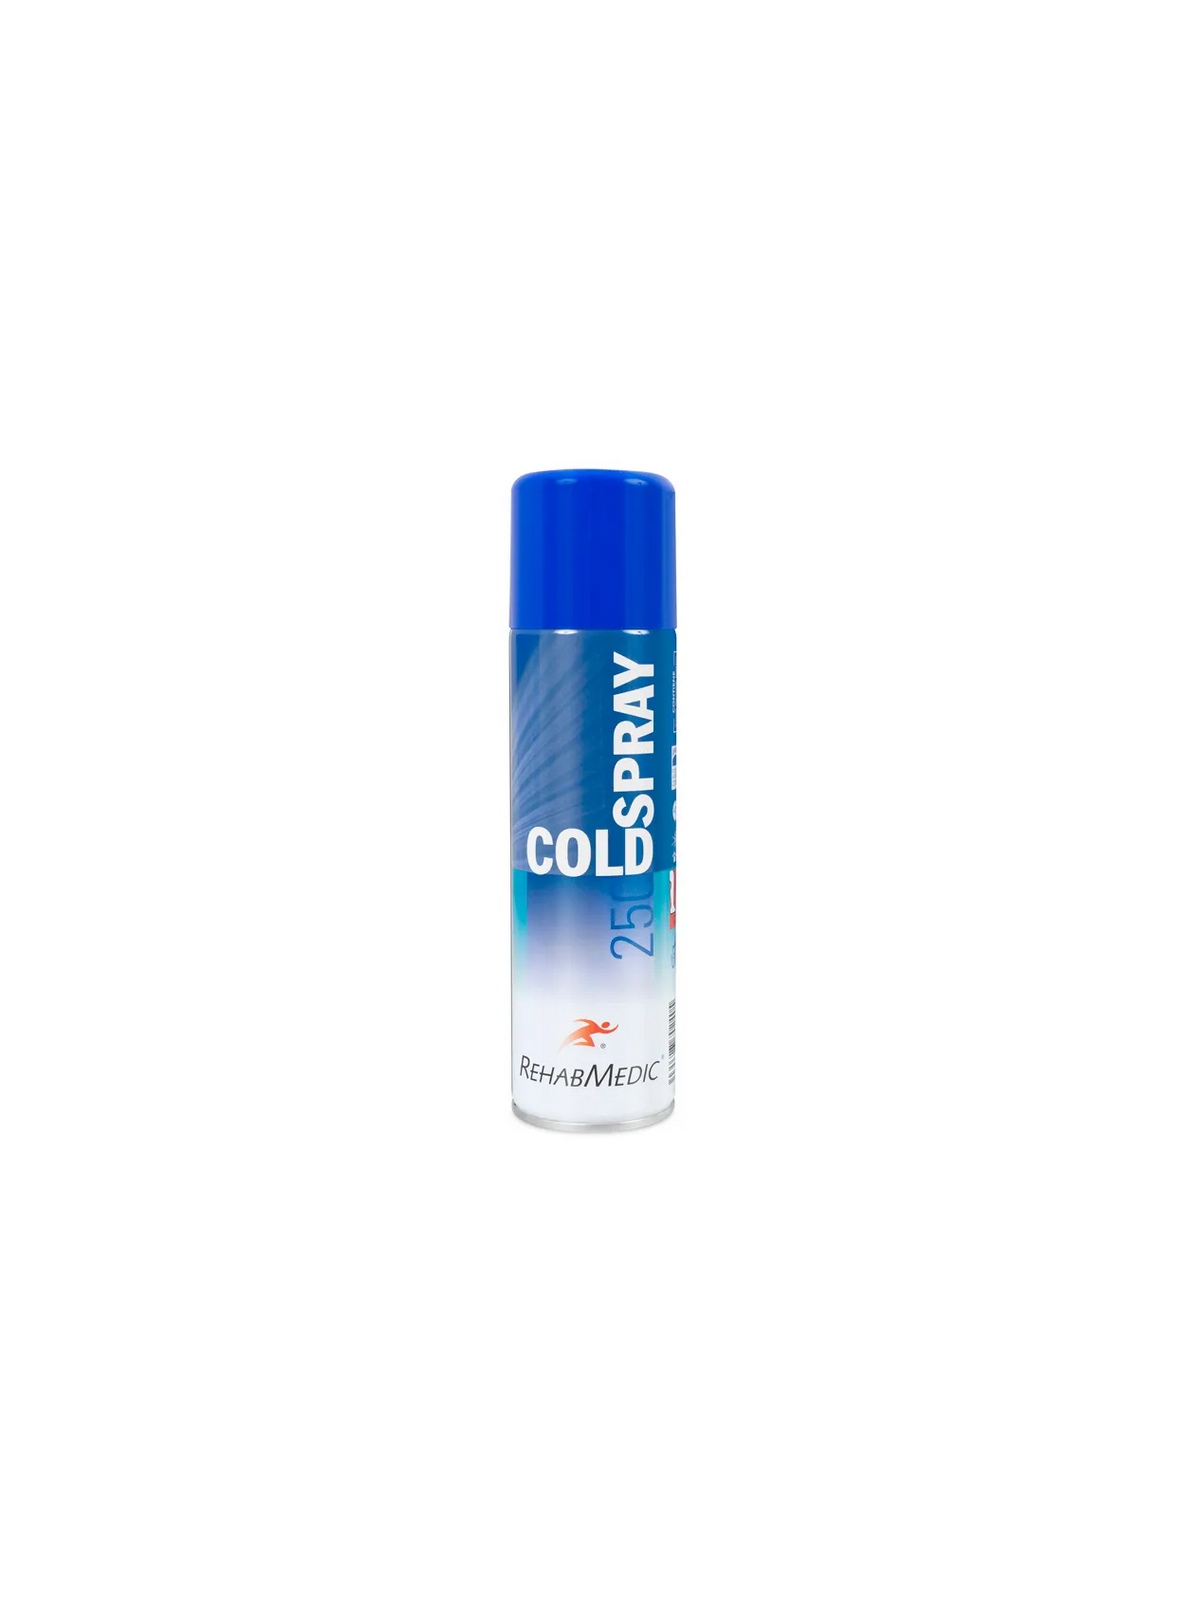 Spray de frio Cold Spray RehabMedic 250